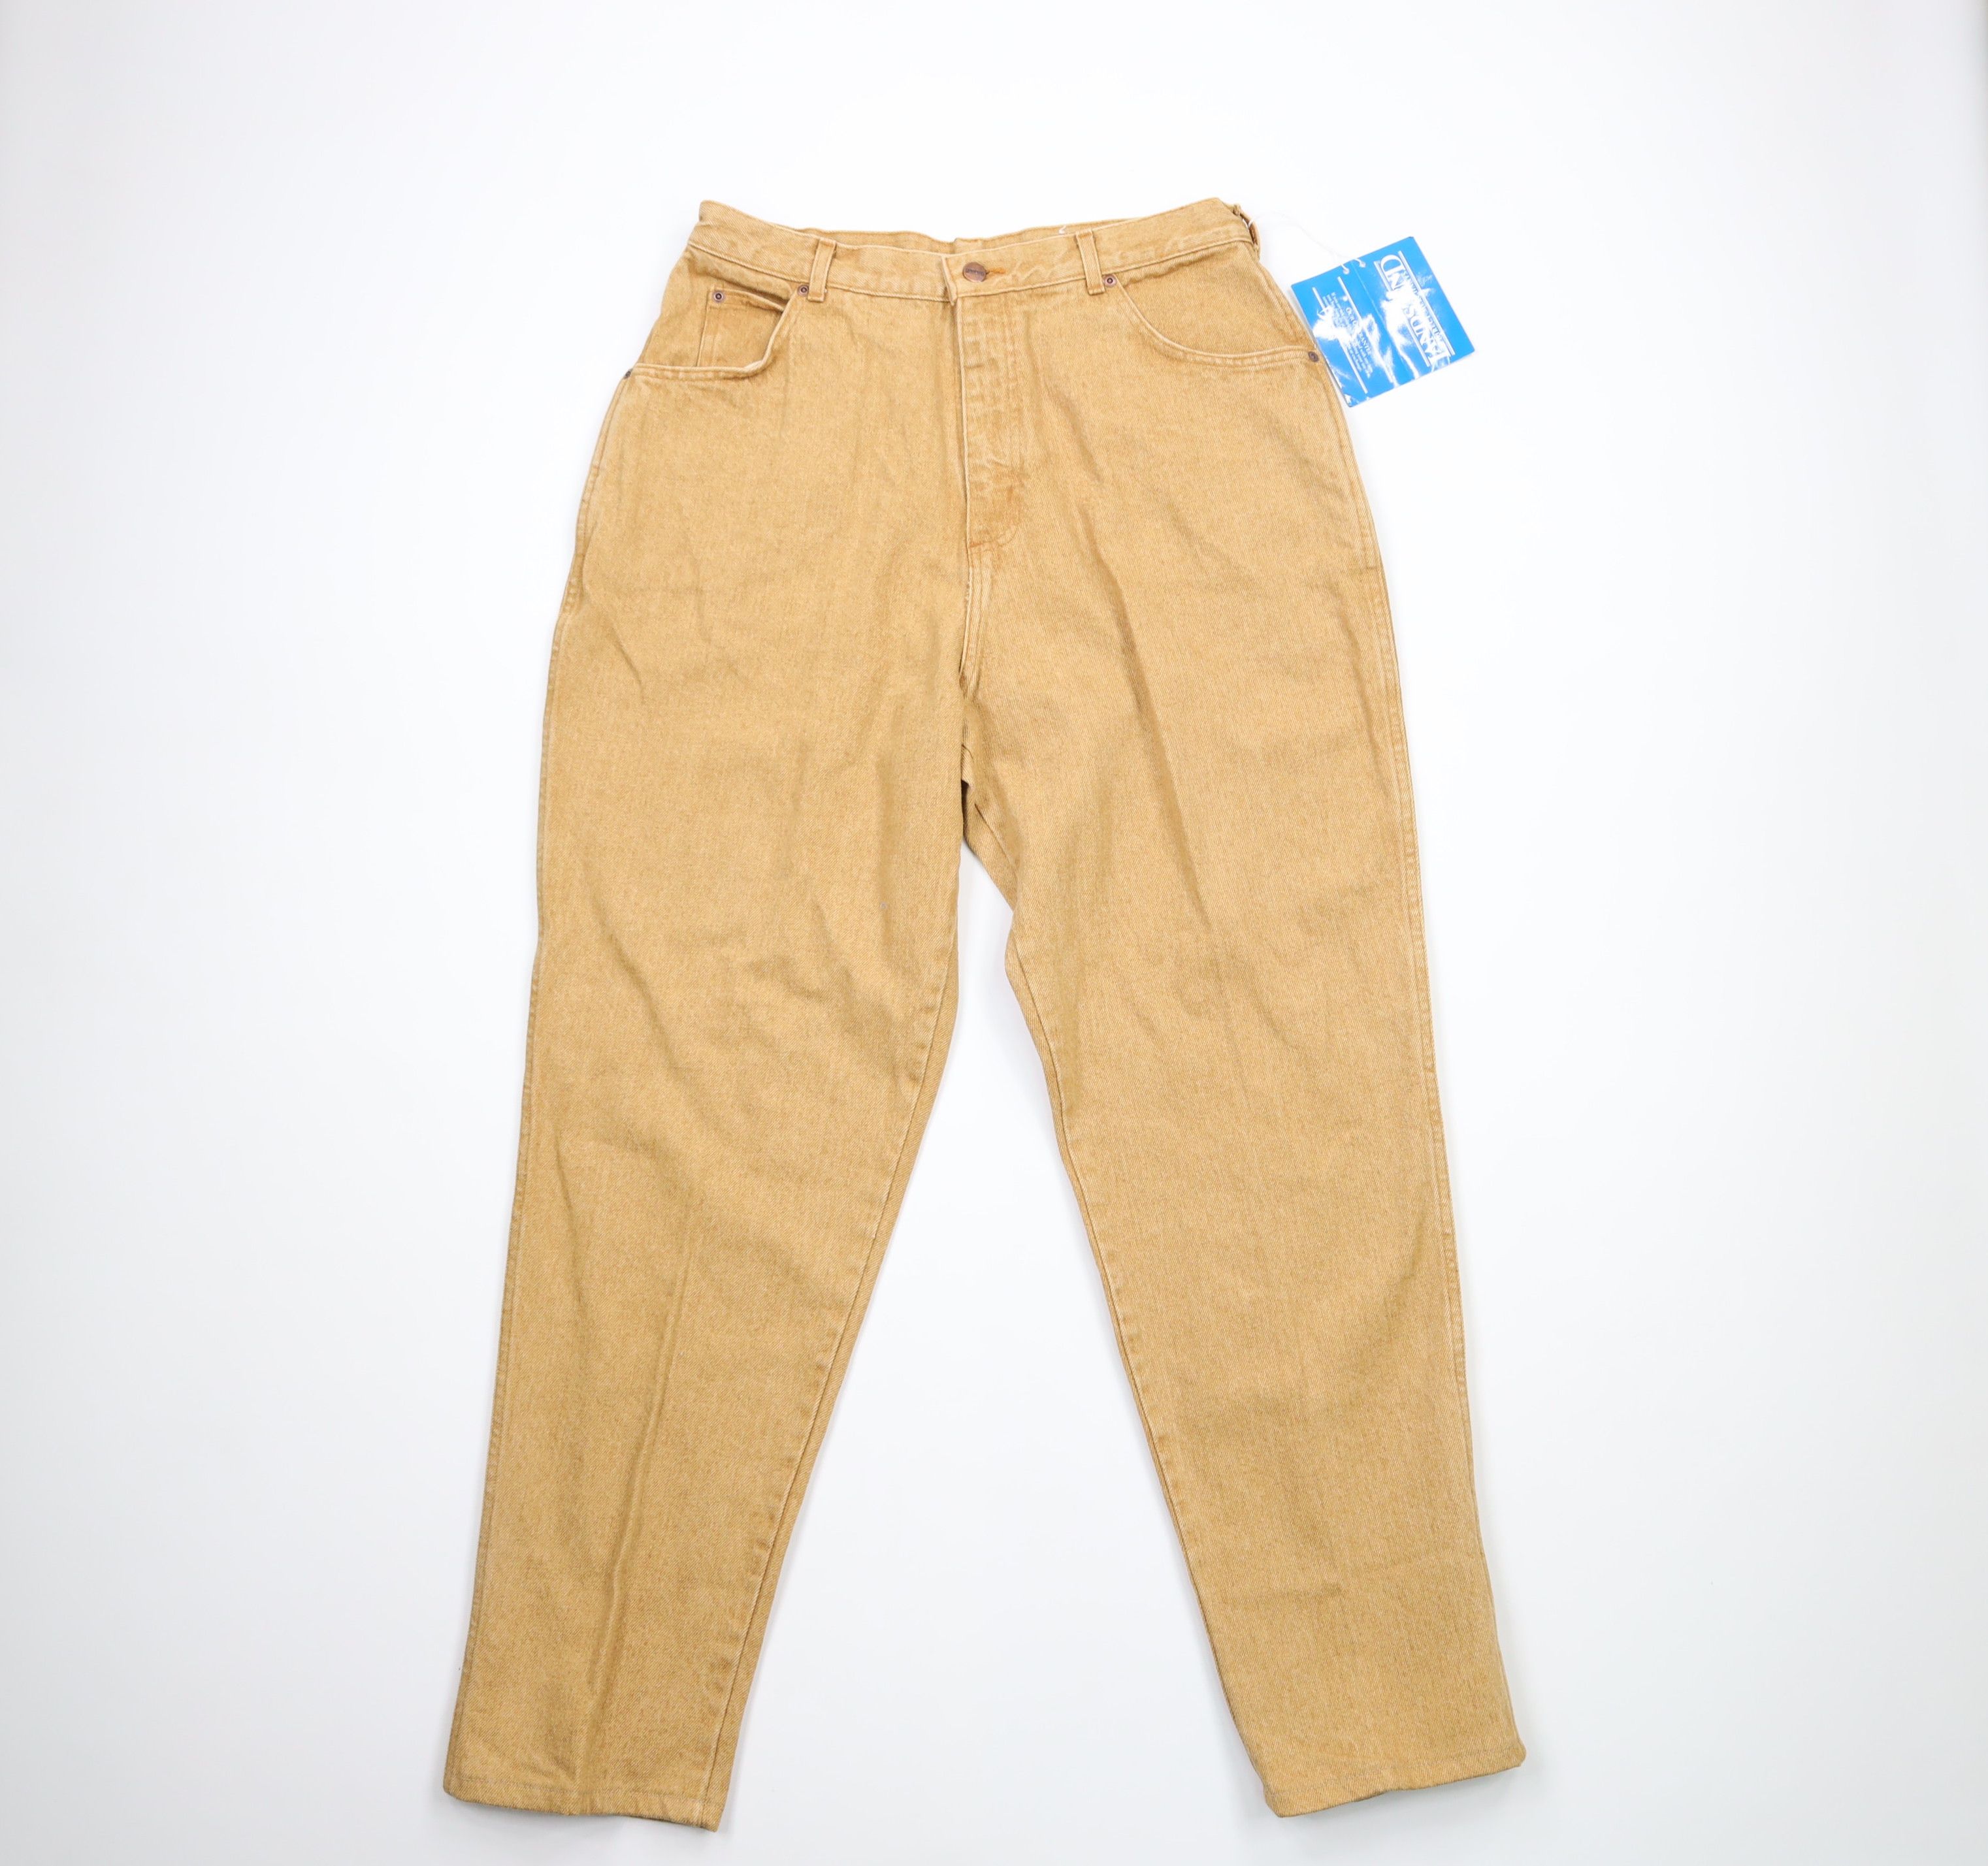 Vintage NOS Vintage 90s Lands End 1High Waisted Denim Mom Jeans USA Size 38" / US 16 / IT 52 - 1 Preview